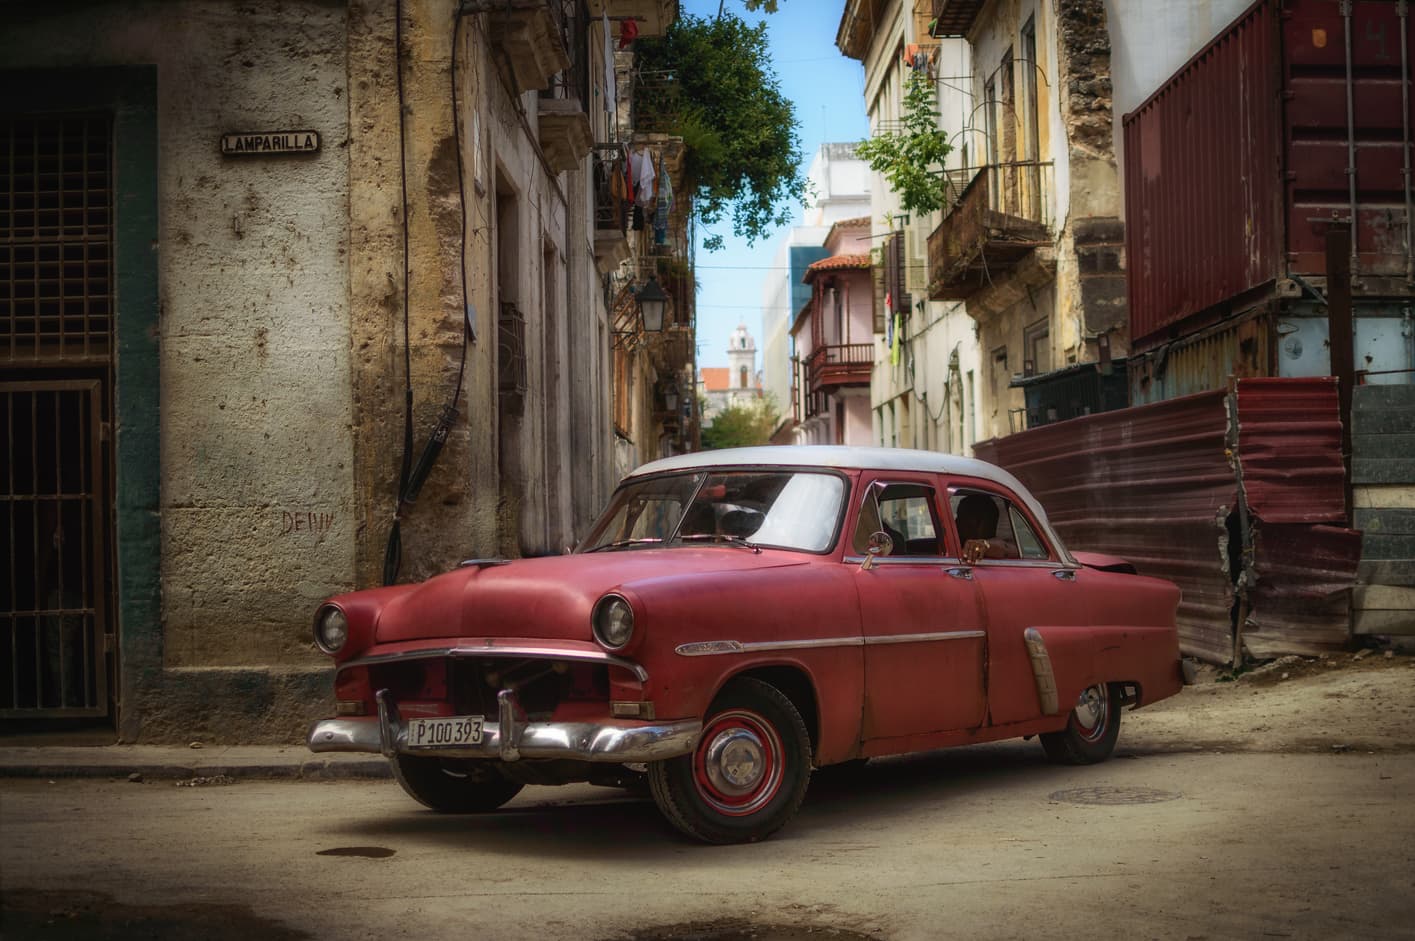 Old red car Lamparilla street old Havana Cuba. Top things to do in Havana. 